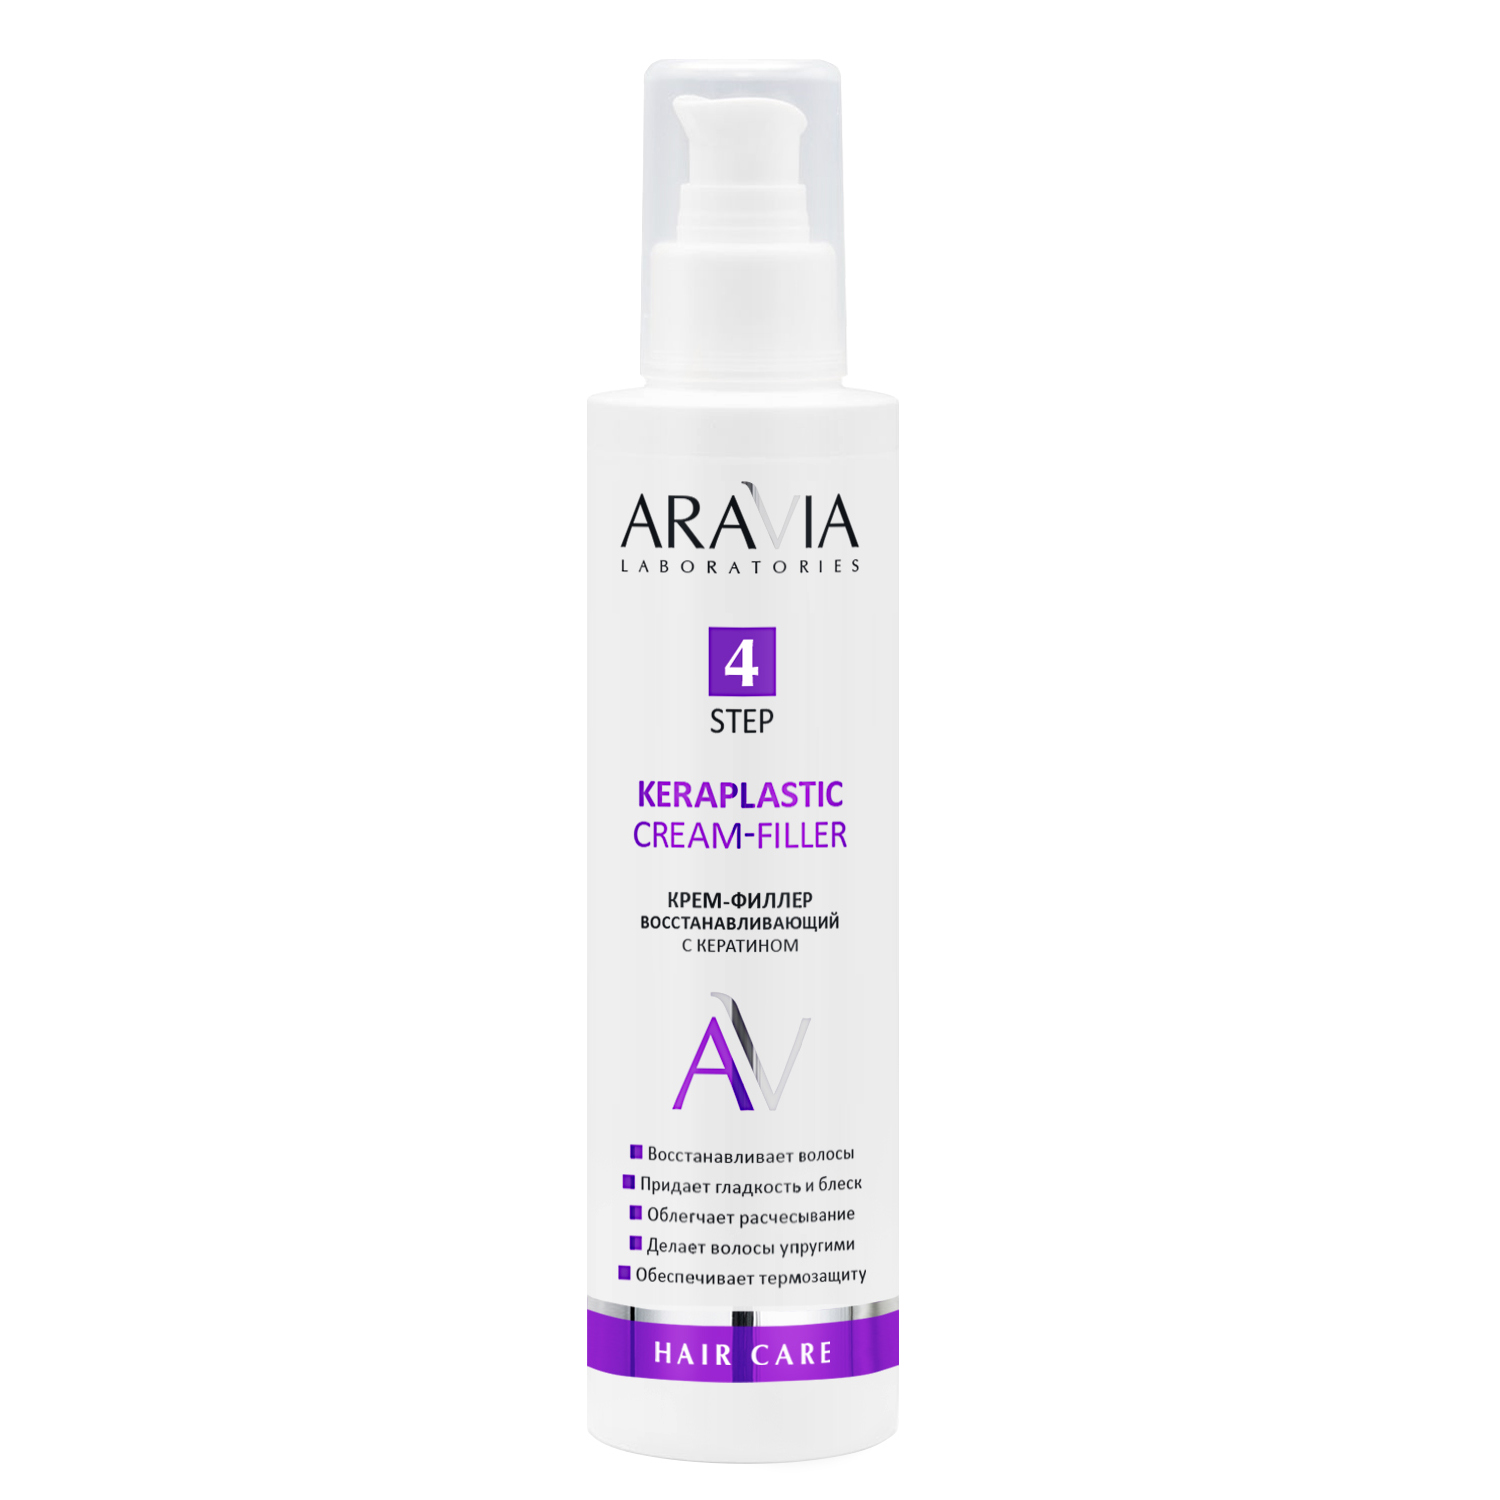 Aravia Laboratories Крем-филлер восстанавливающий с кератином Keraplastic Cream-filler, 200 мл (Aravia Laboratories, Уход за волосами)